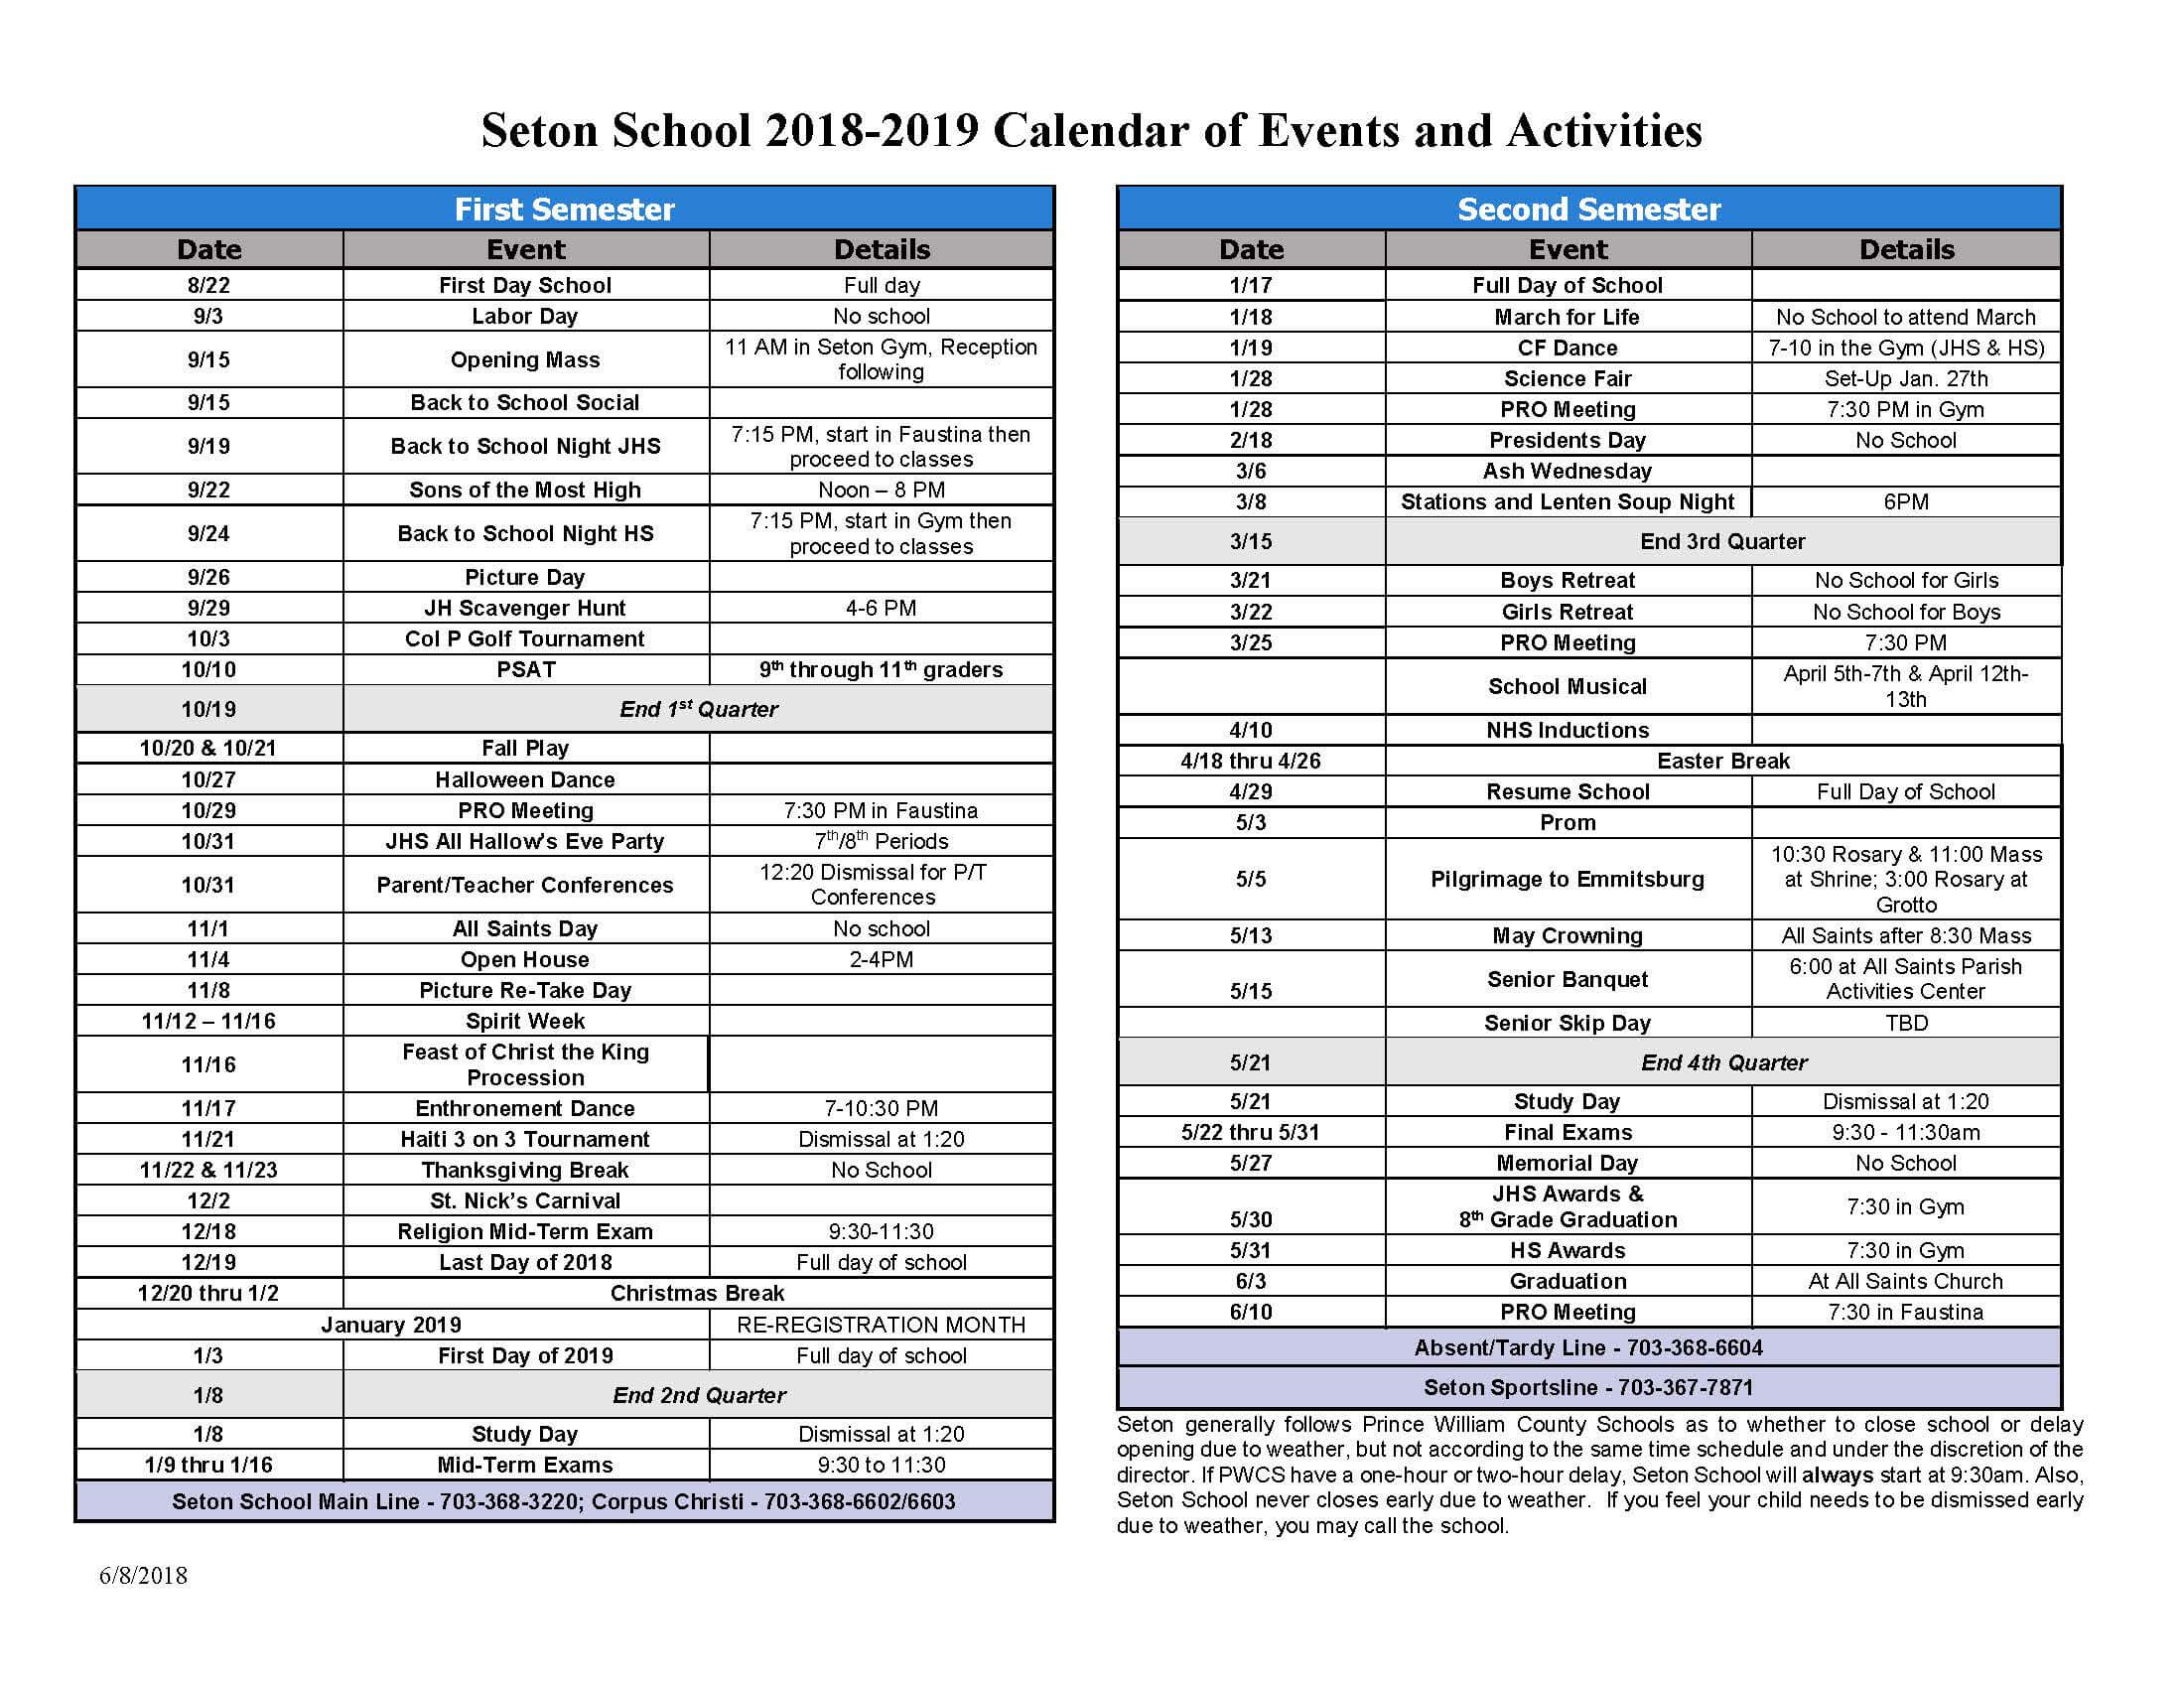 2018-2019 Seton School Calendar of Events and Activities | Seton School Manassas2200 x 1700